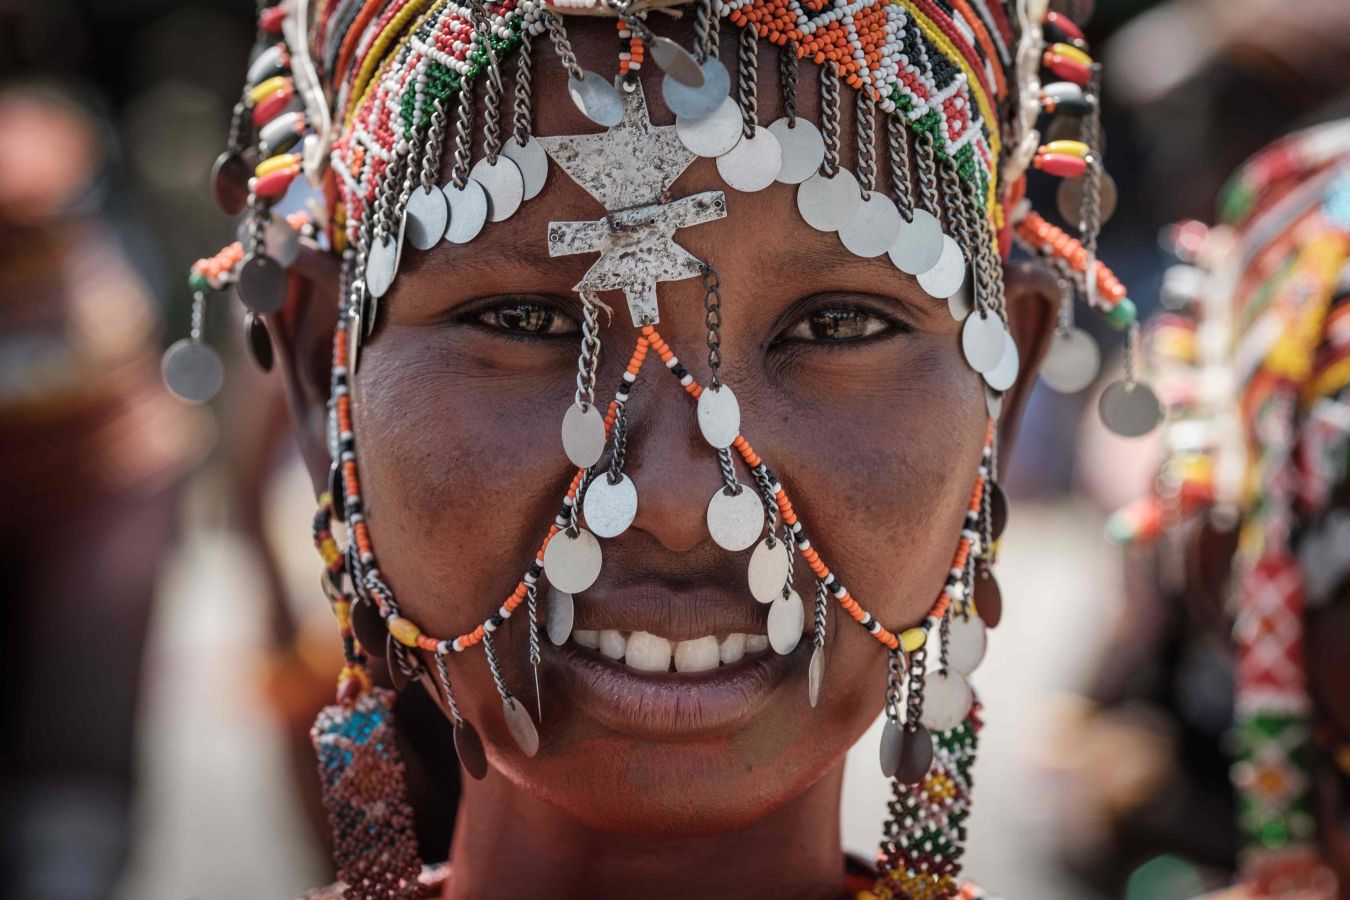 Diferentes tribus de África se han congregado en un festival cultural